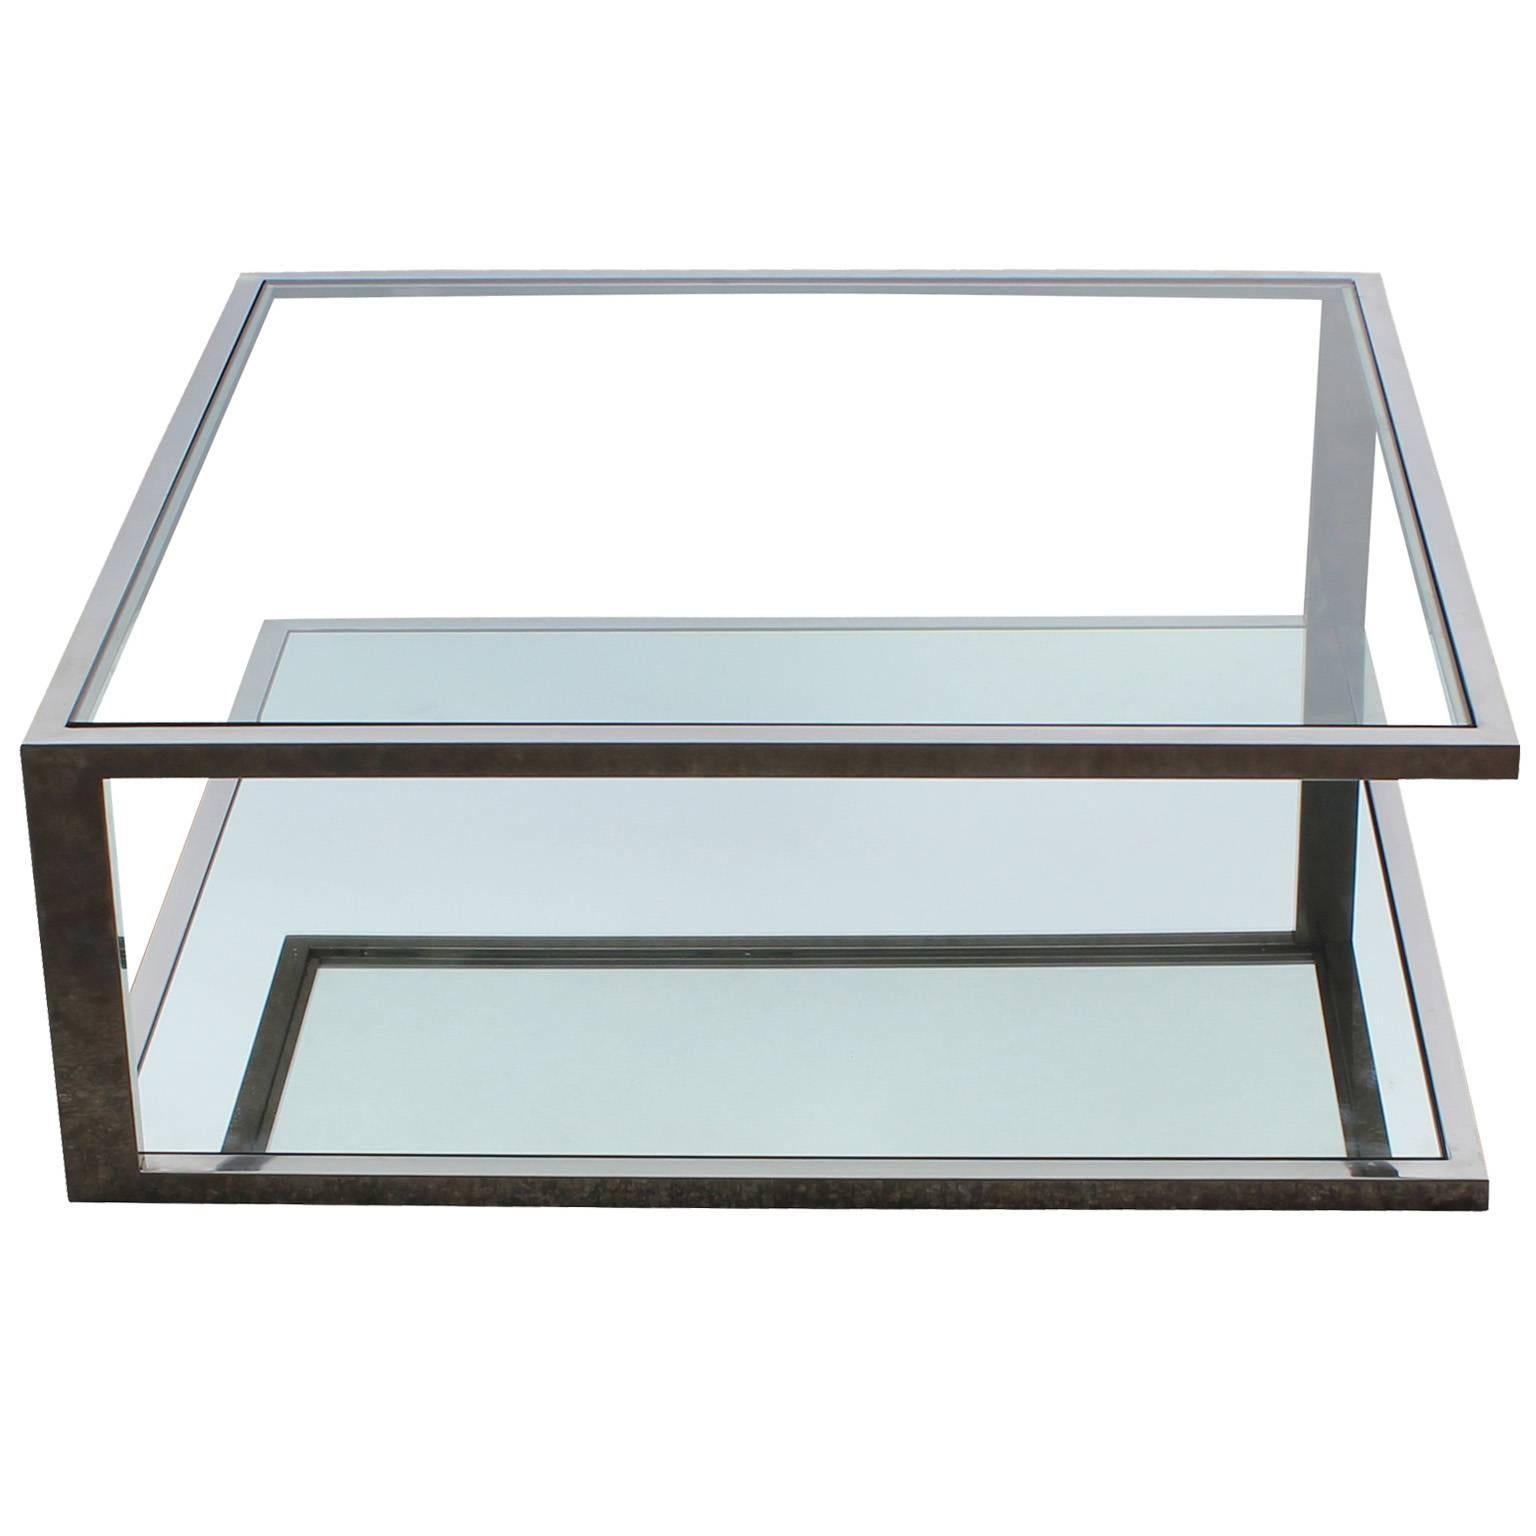 American Angular Modernist Square Chrome and Glass Coffee Table